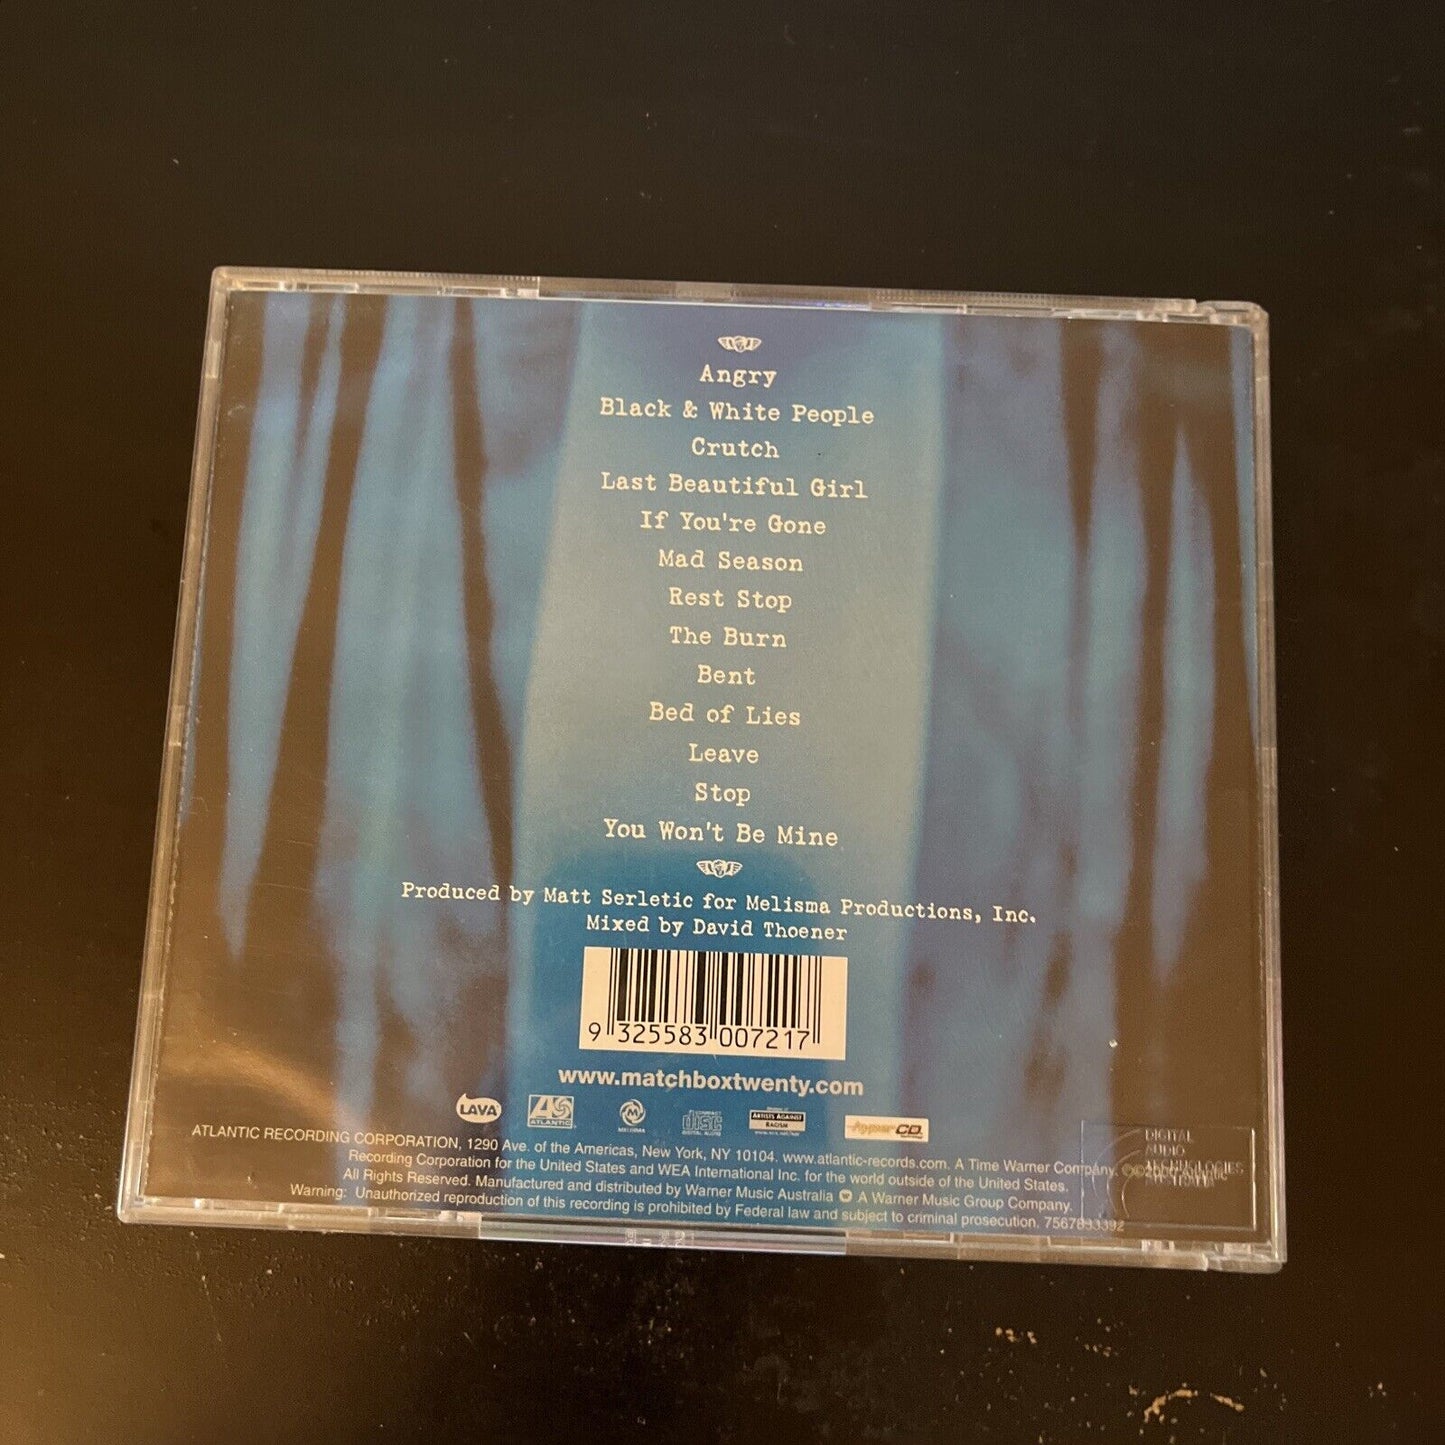 Matchbox Twenty - Mad Season (CD, 2000) Enhanced CD